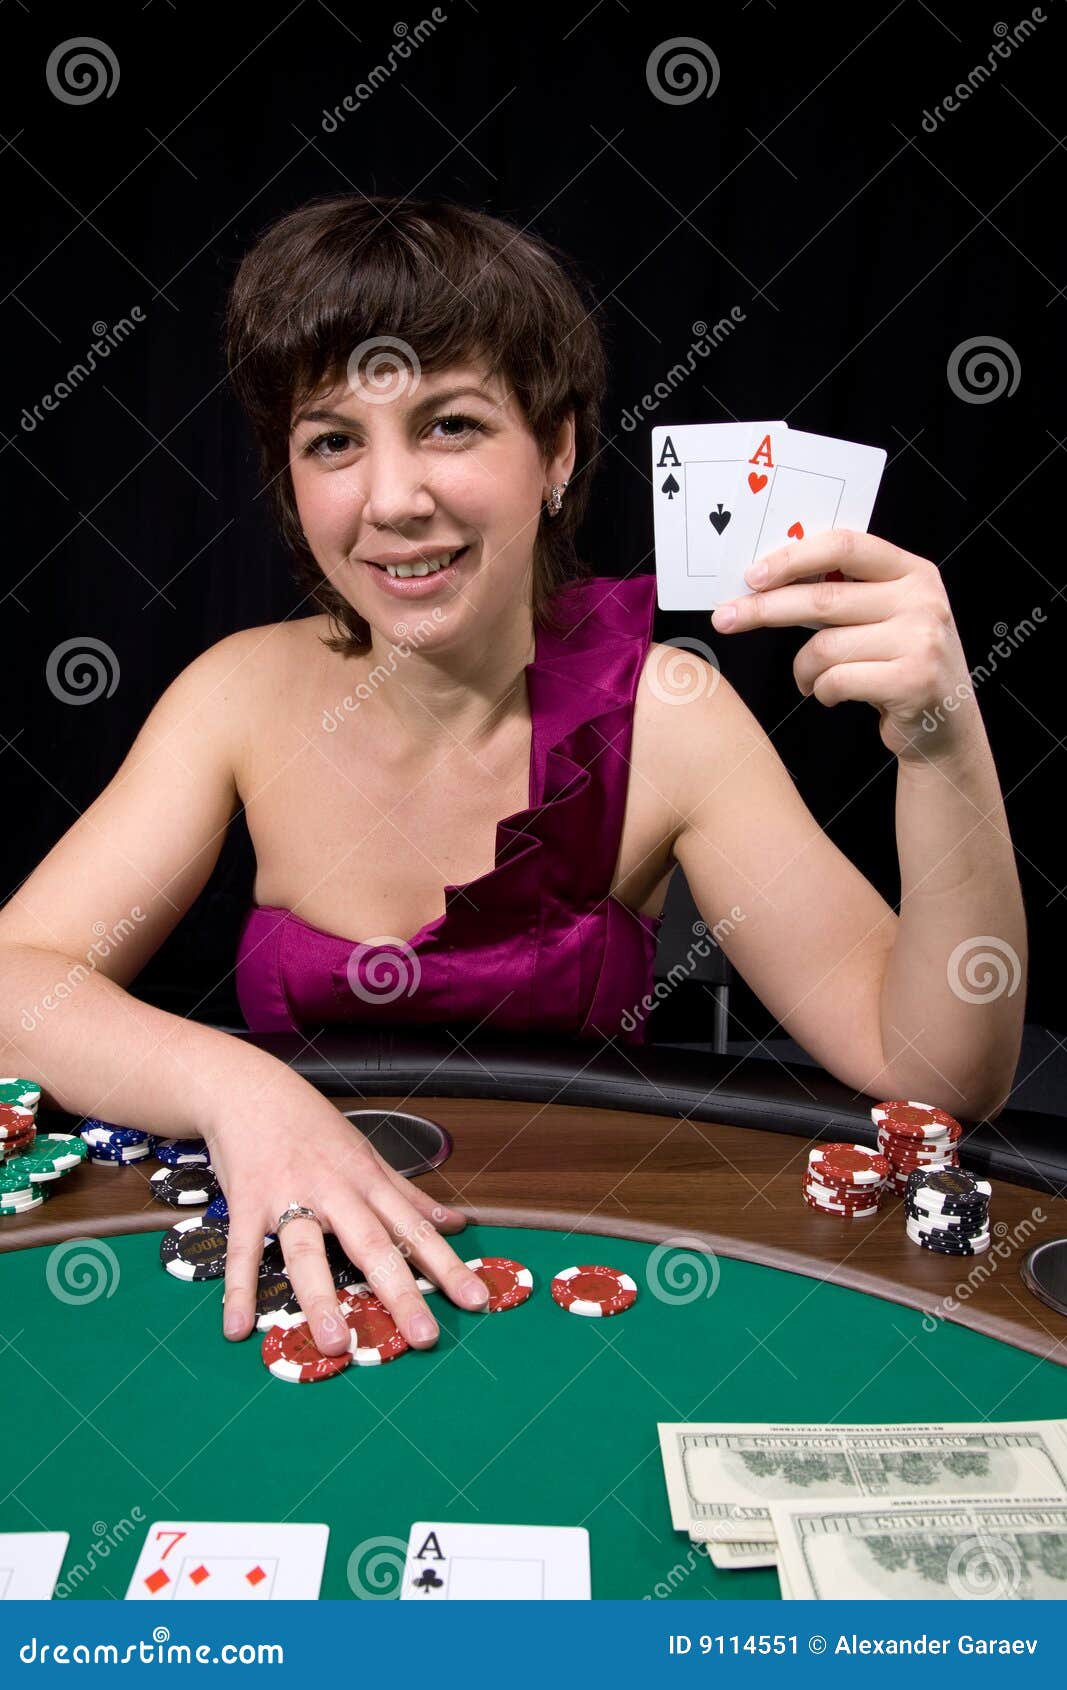 Poker babe stock image. Image of color, green, chips, felt - 9114551